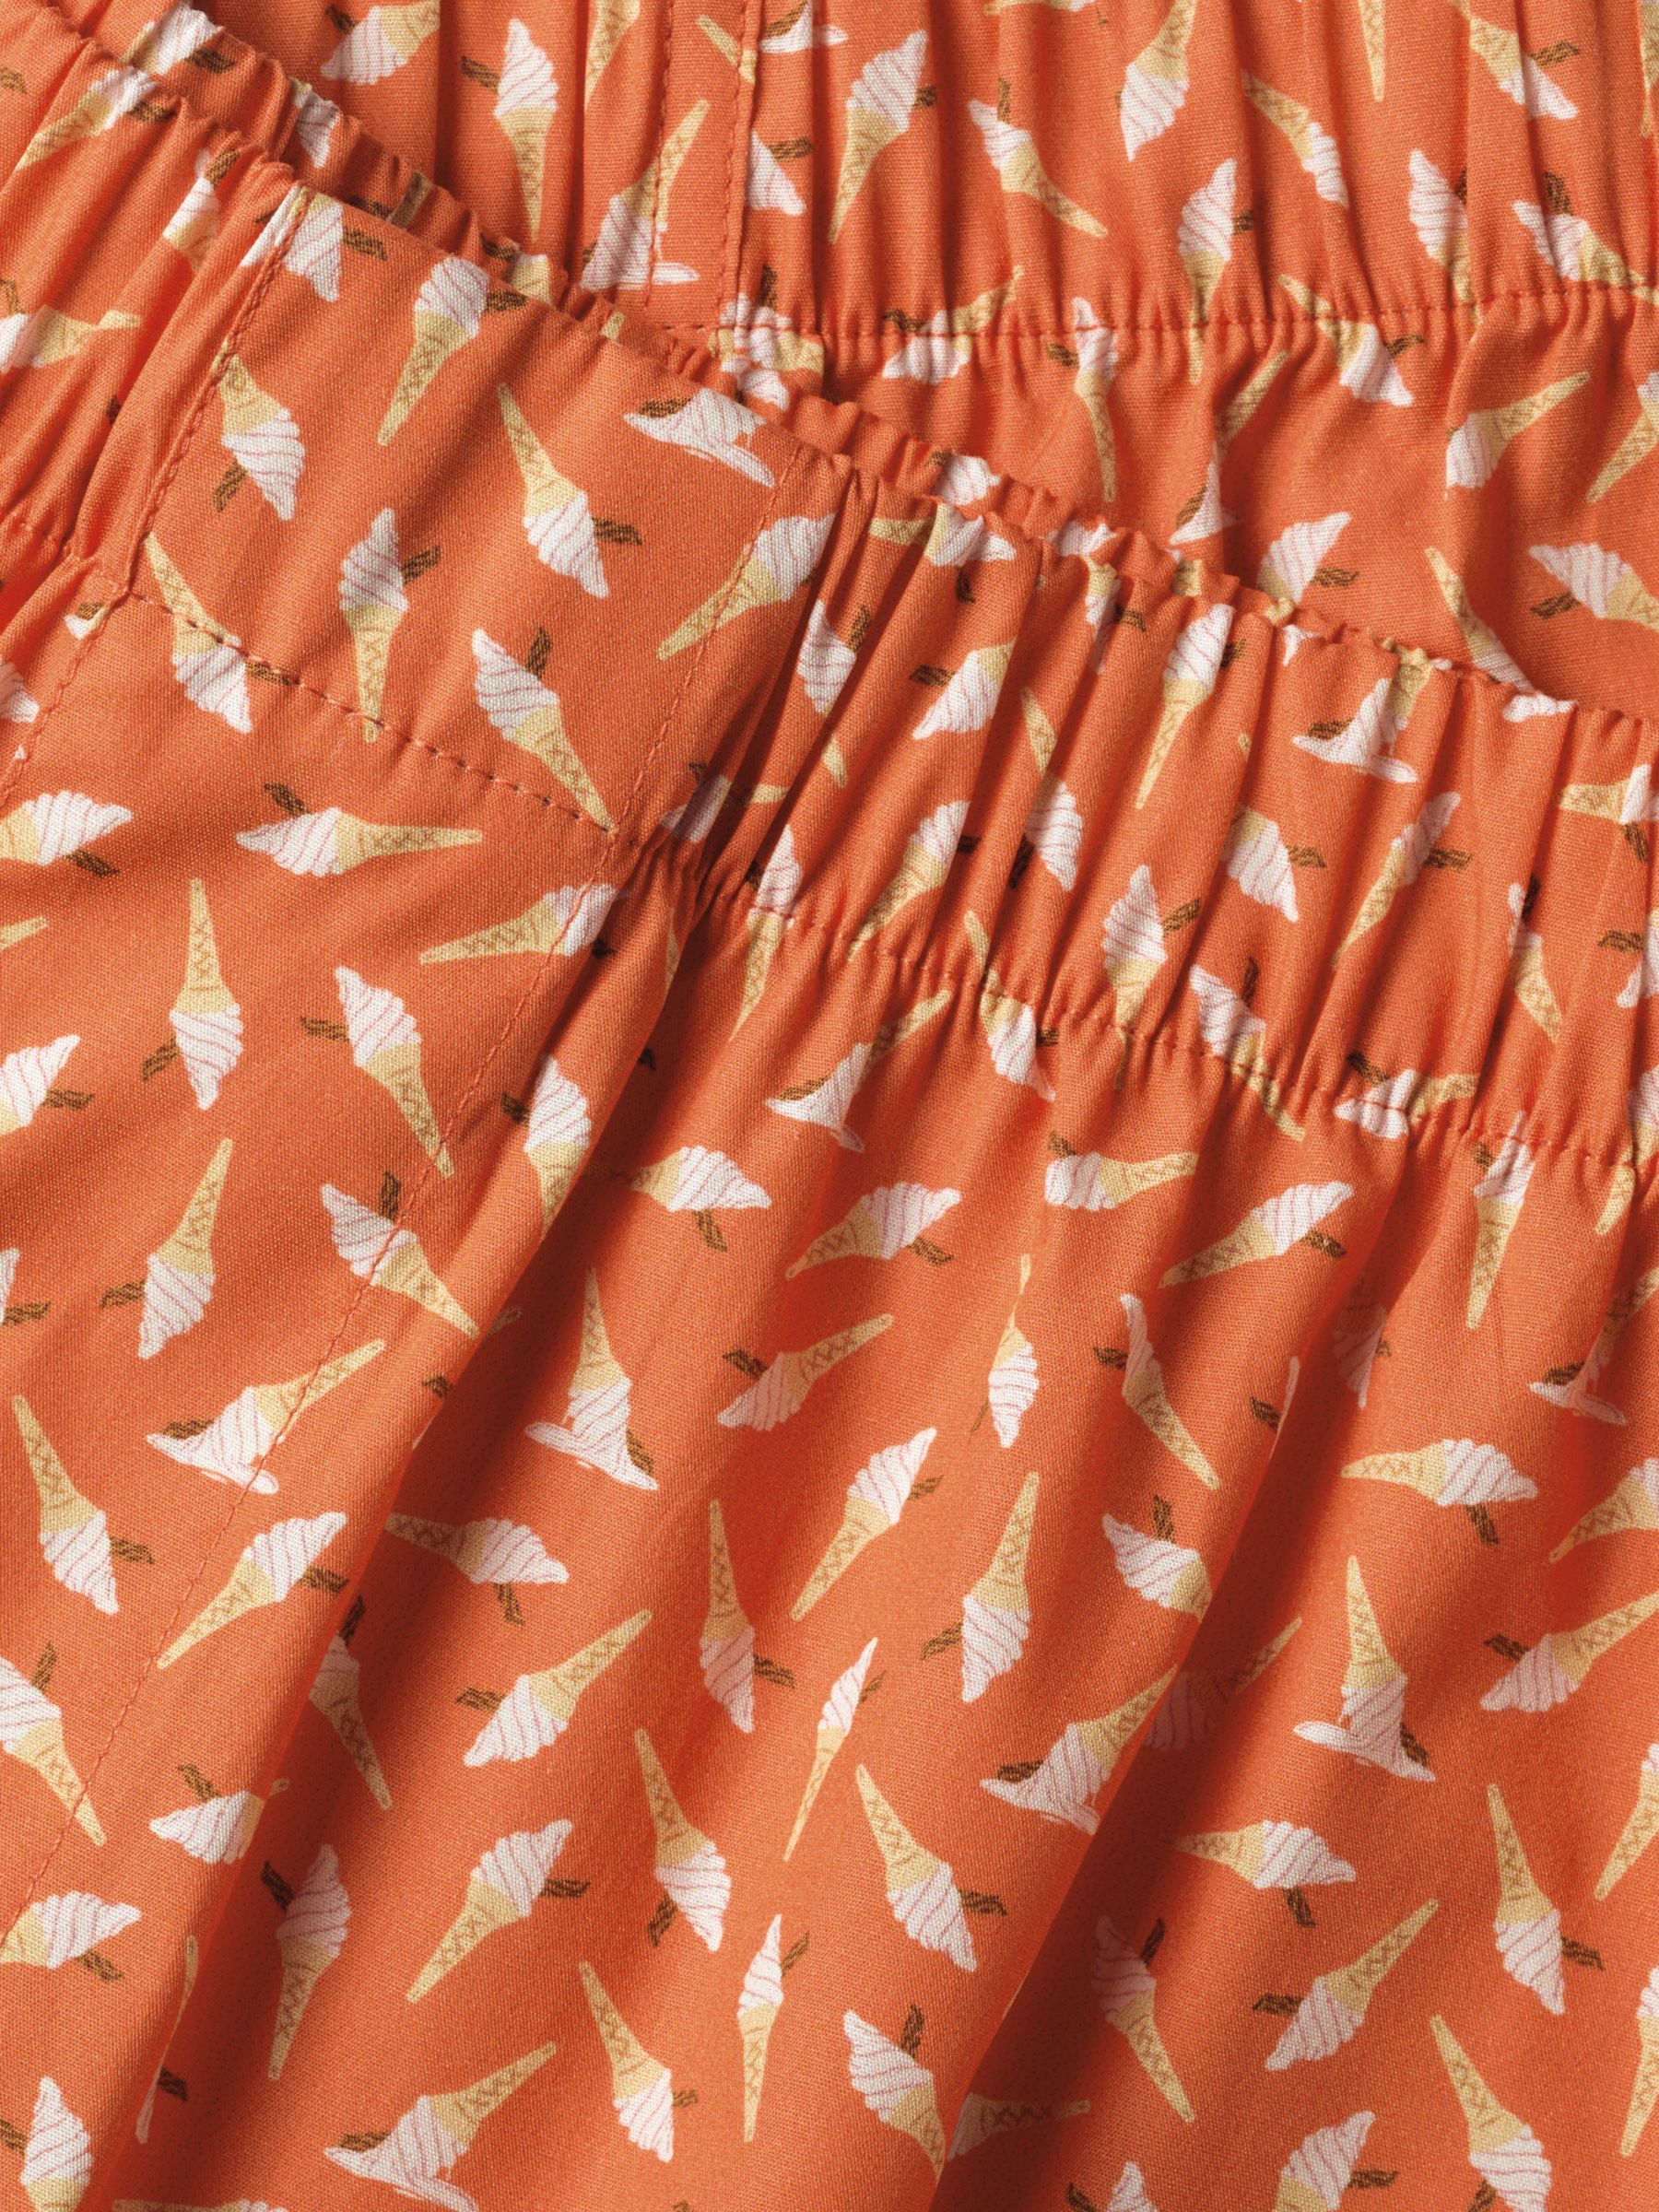 Charles Tyrwhitt Ice Cream Print Cotton Boxer Shorts, Orange, M